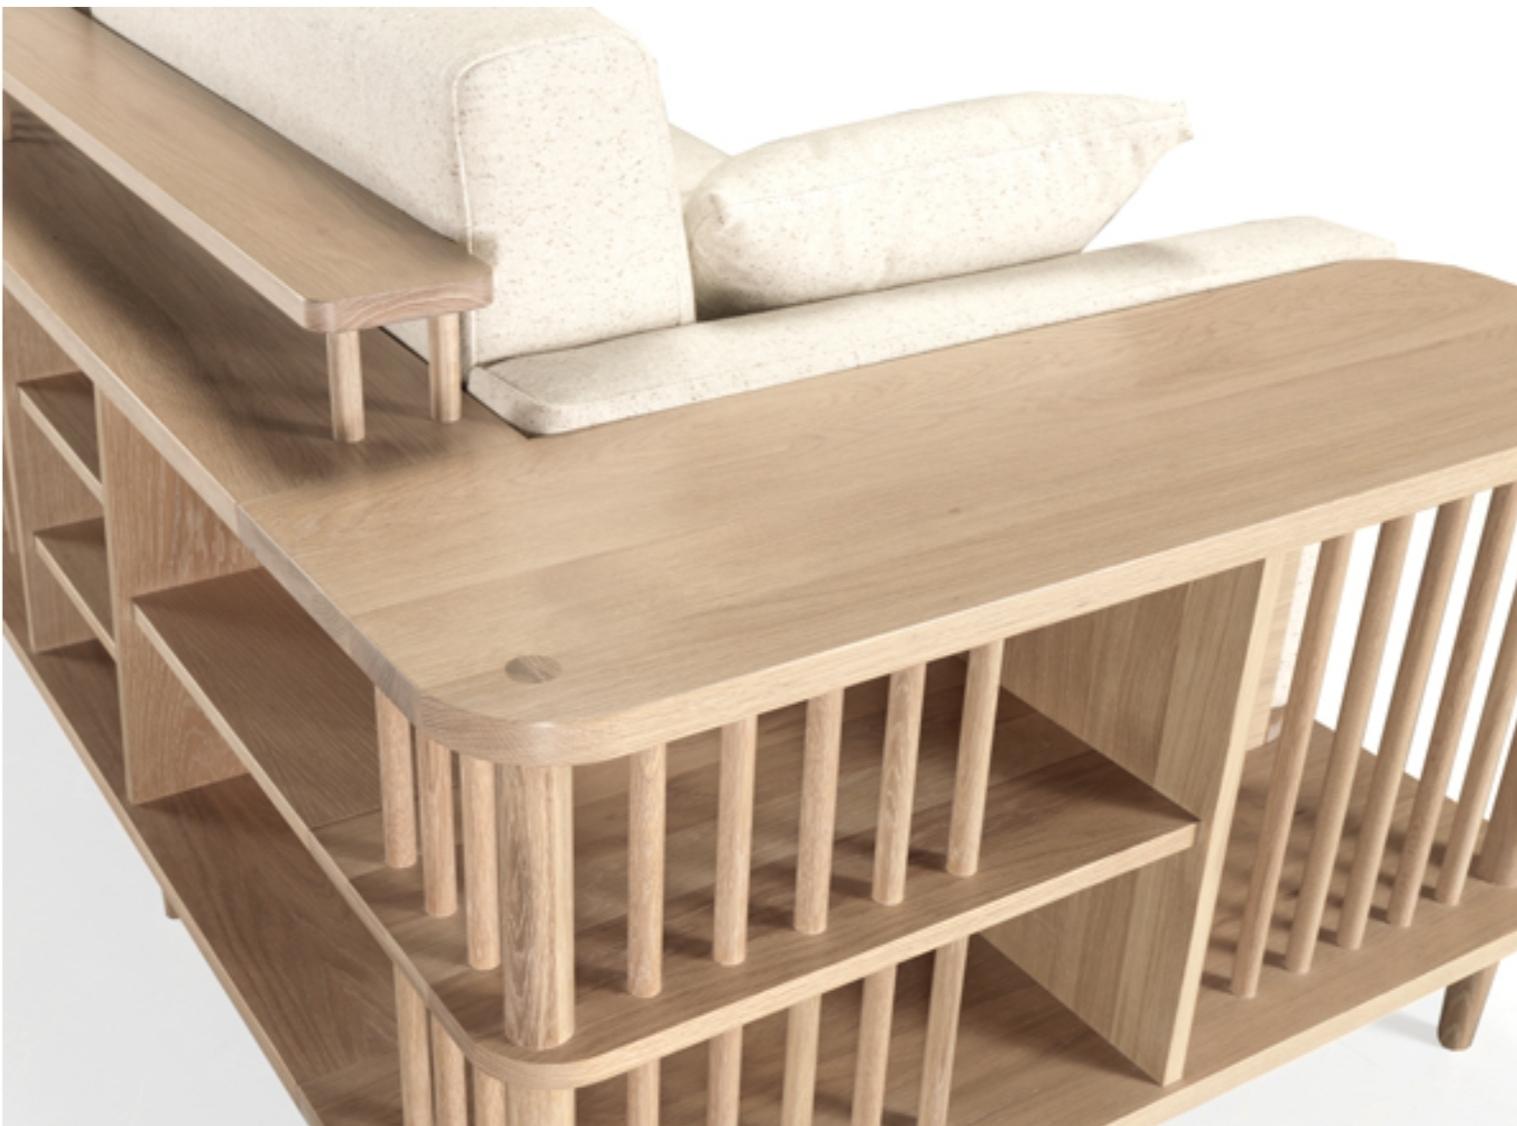 Portuguese Nordic Style Sofa and Bookshelf Room Divider in Walnut or Oak